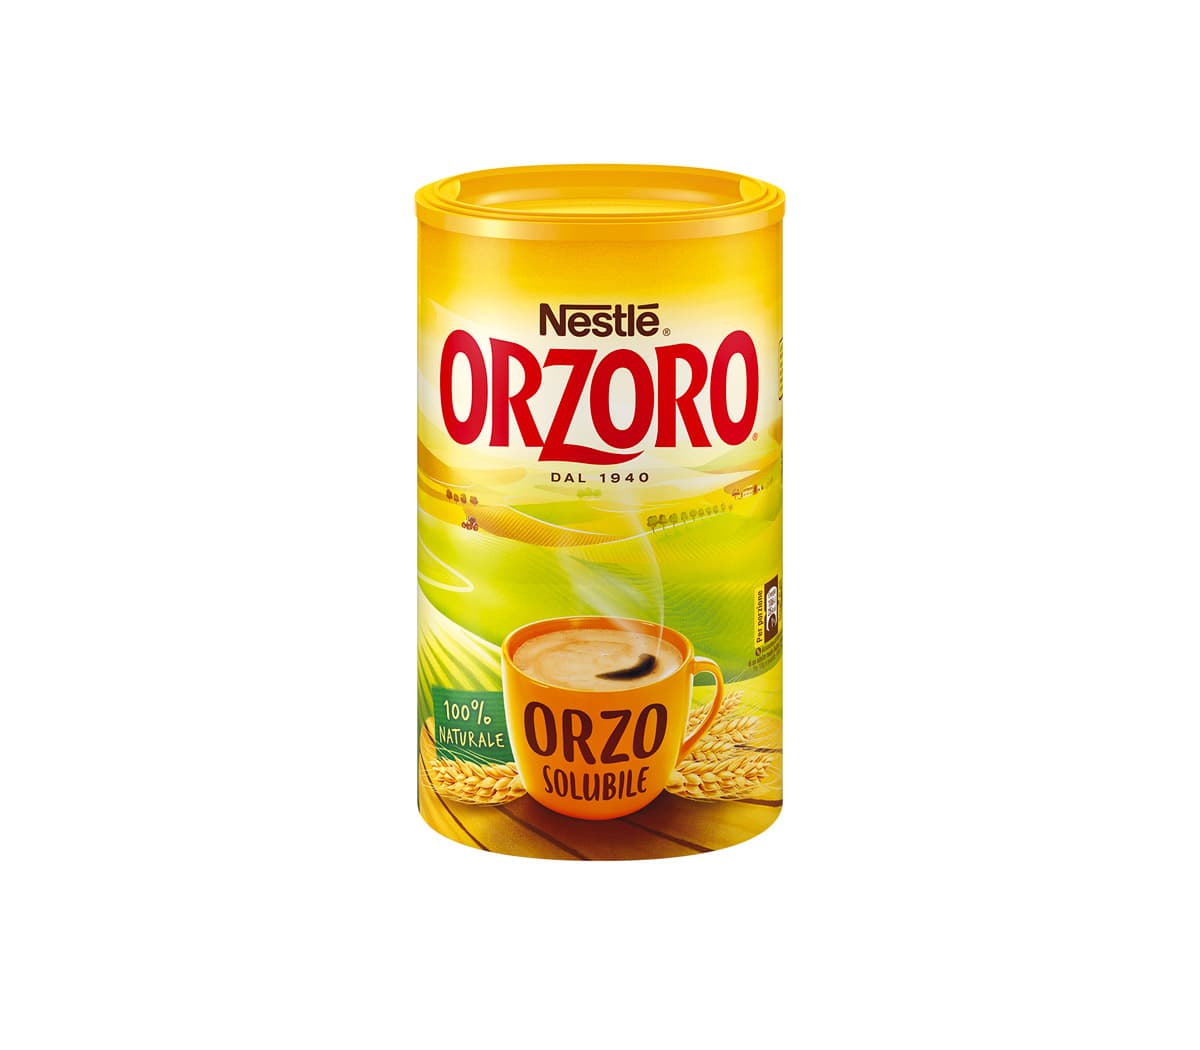 Nestlé Orzoro Orzo Solubile barattolo 200g